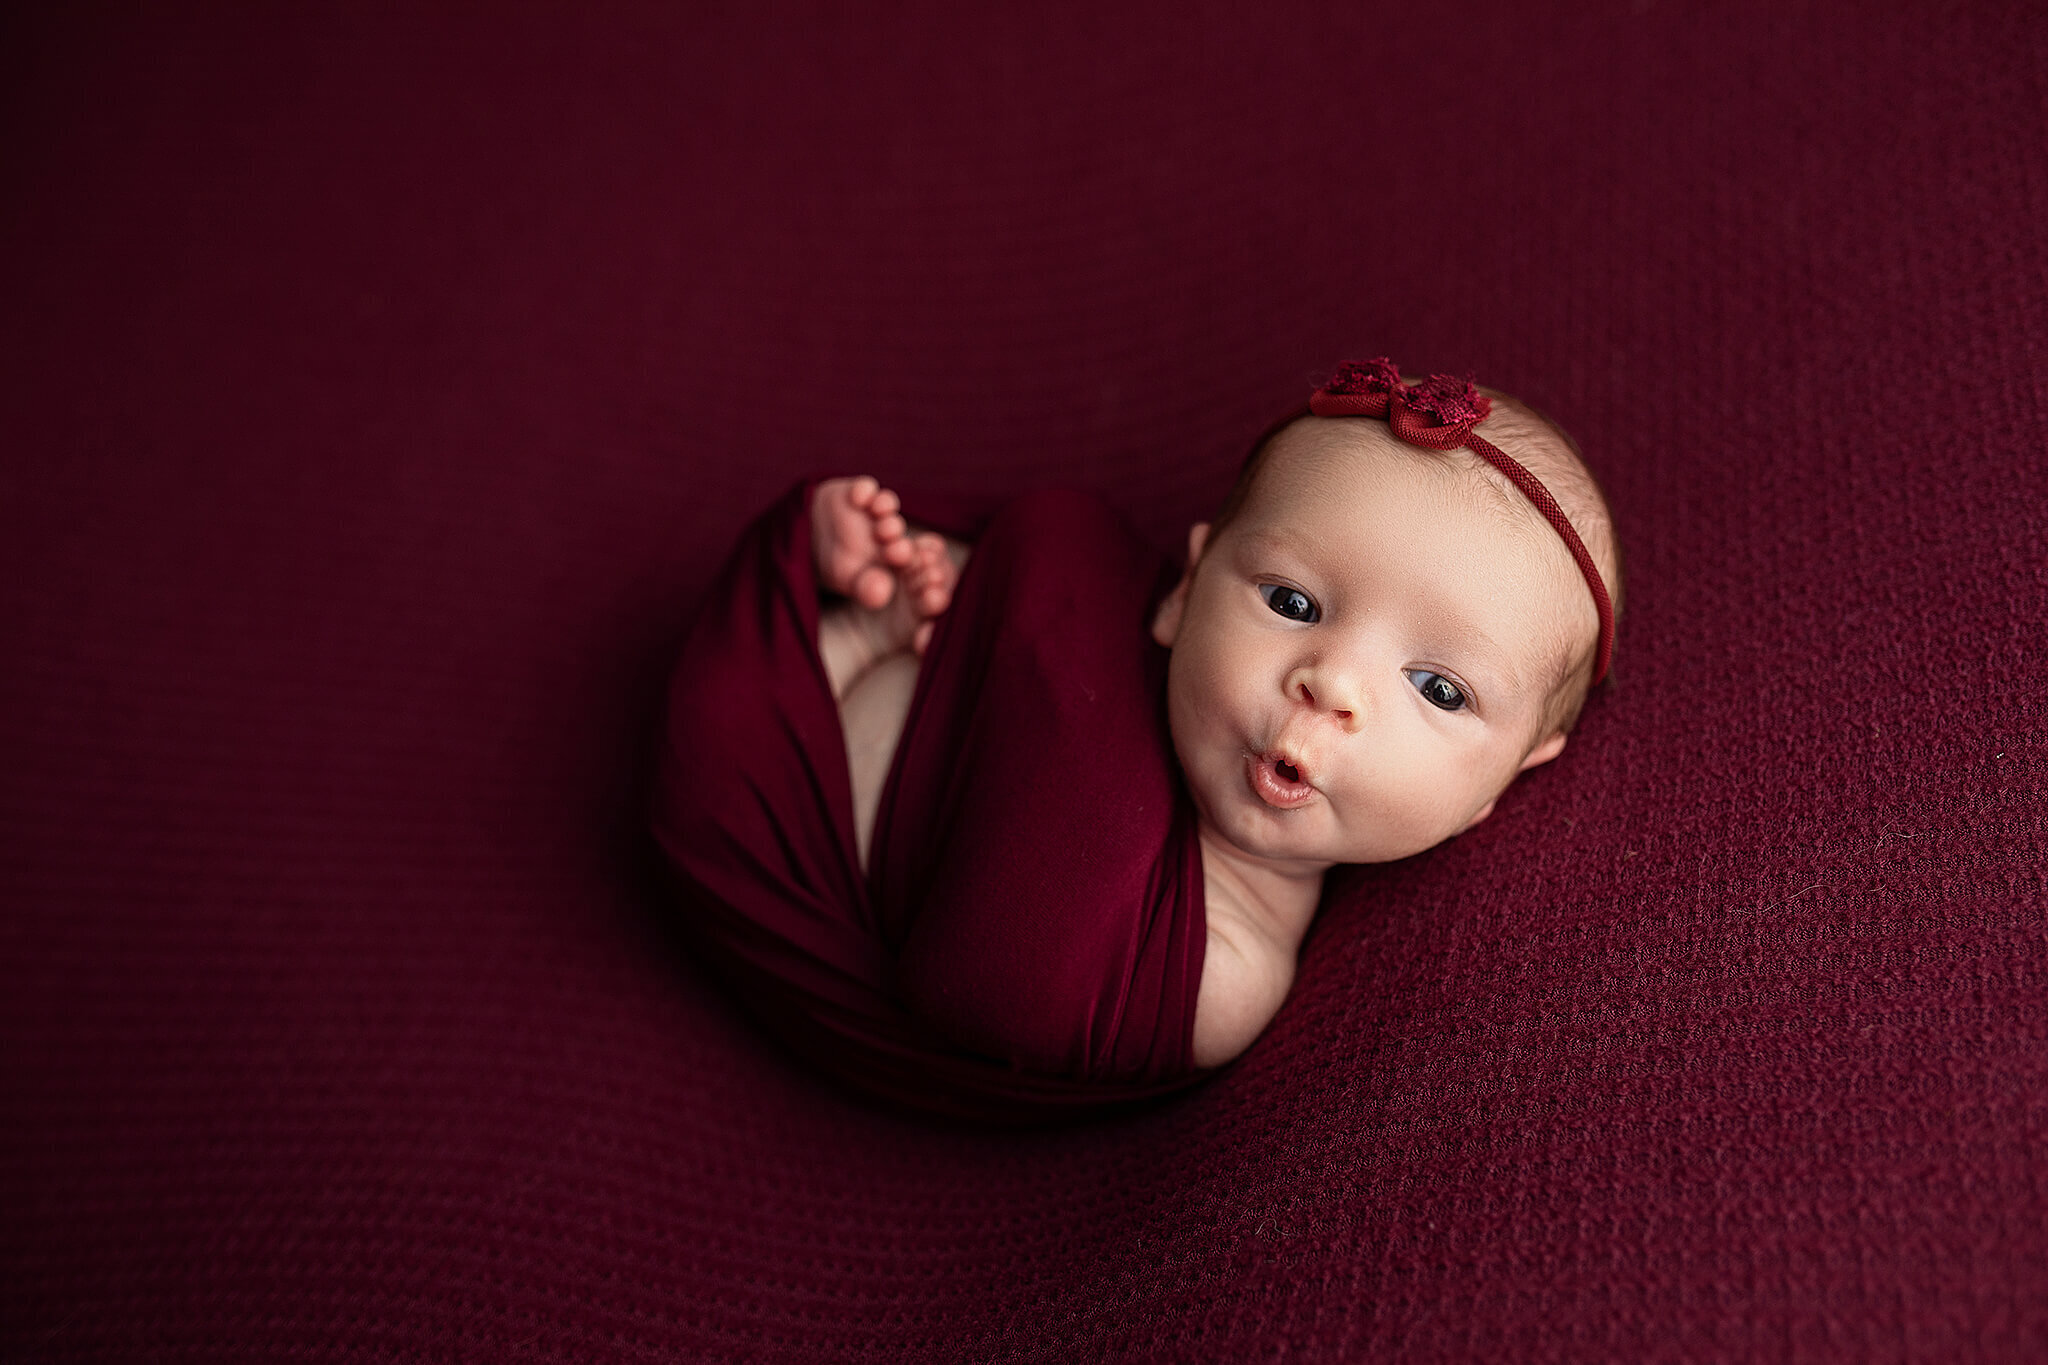 Newborn baby girl swaddled in scarlet wrap on a scarlet blanket